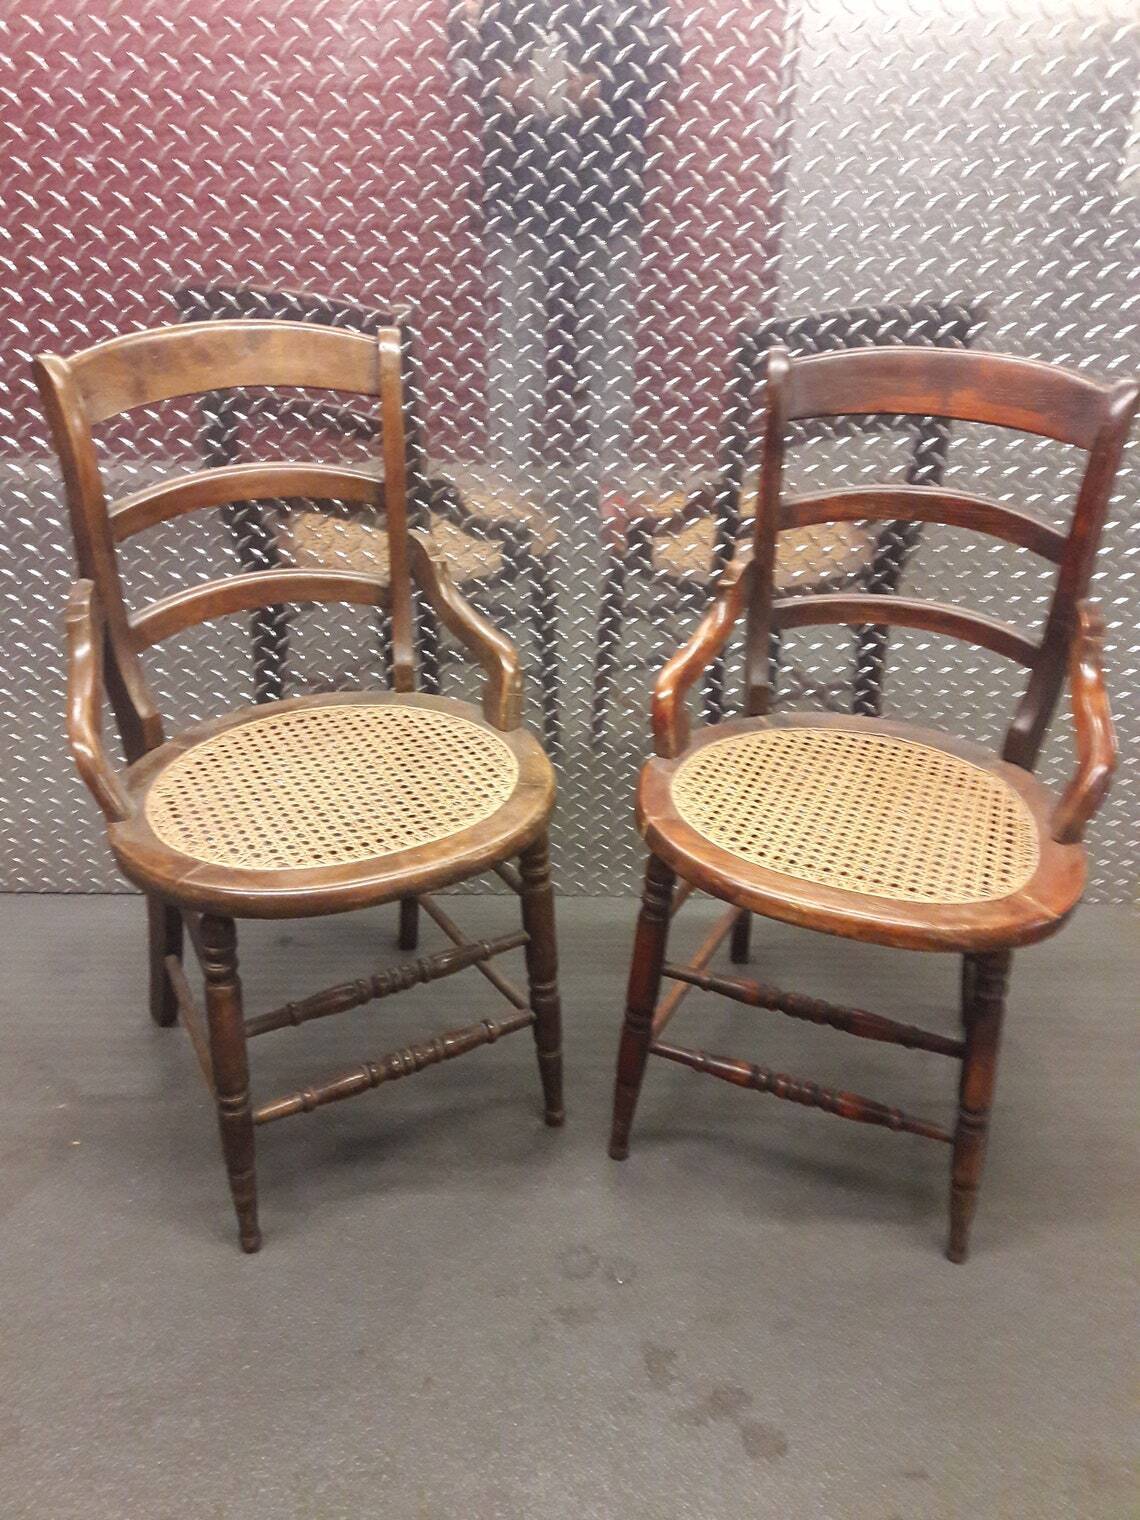 Original Victorian era captain’s chairs 